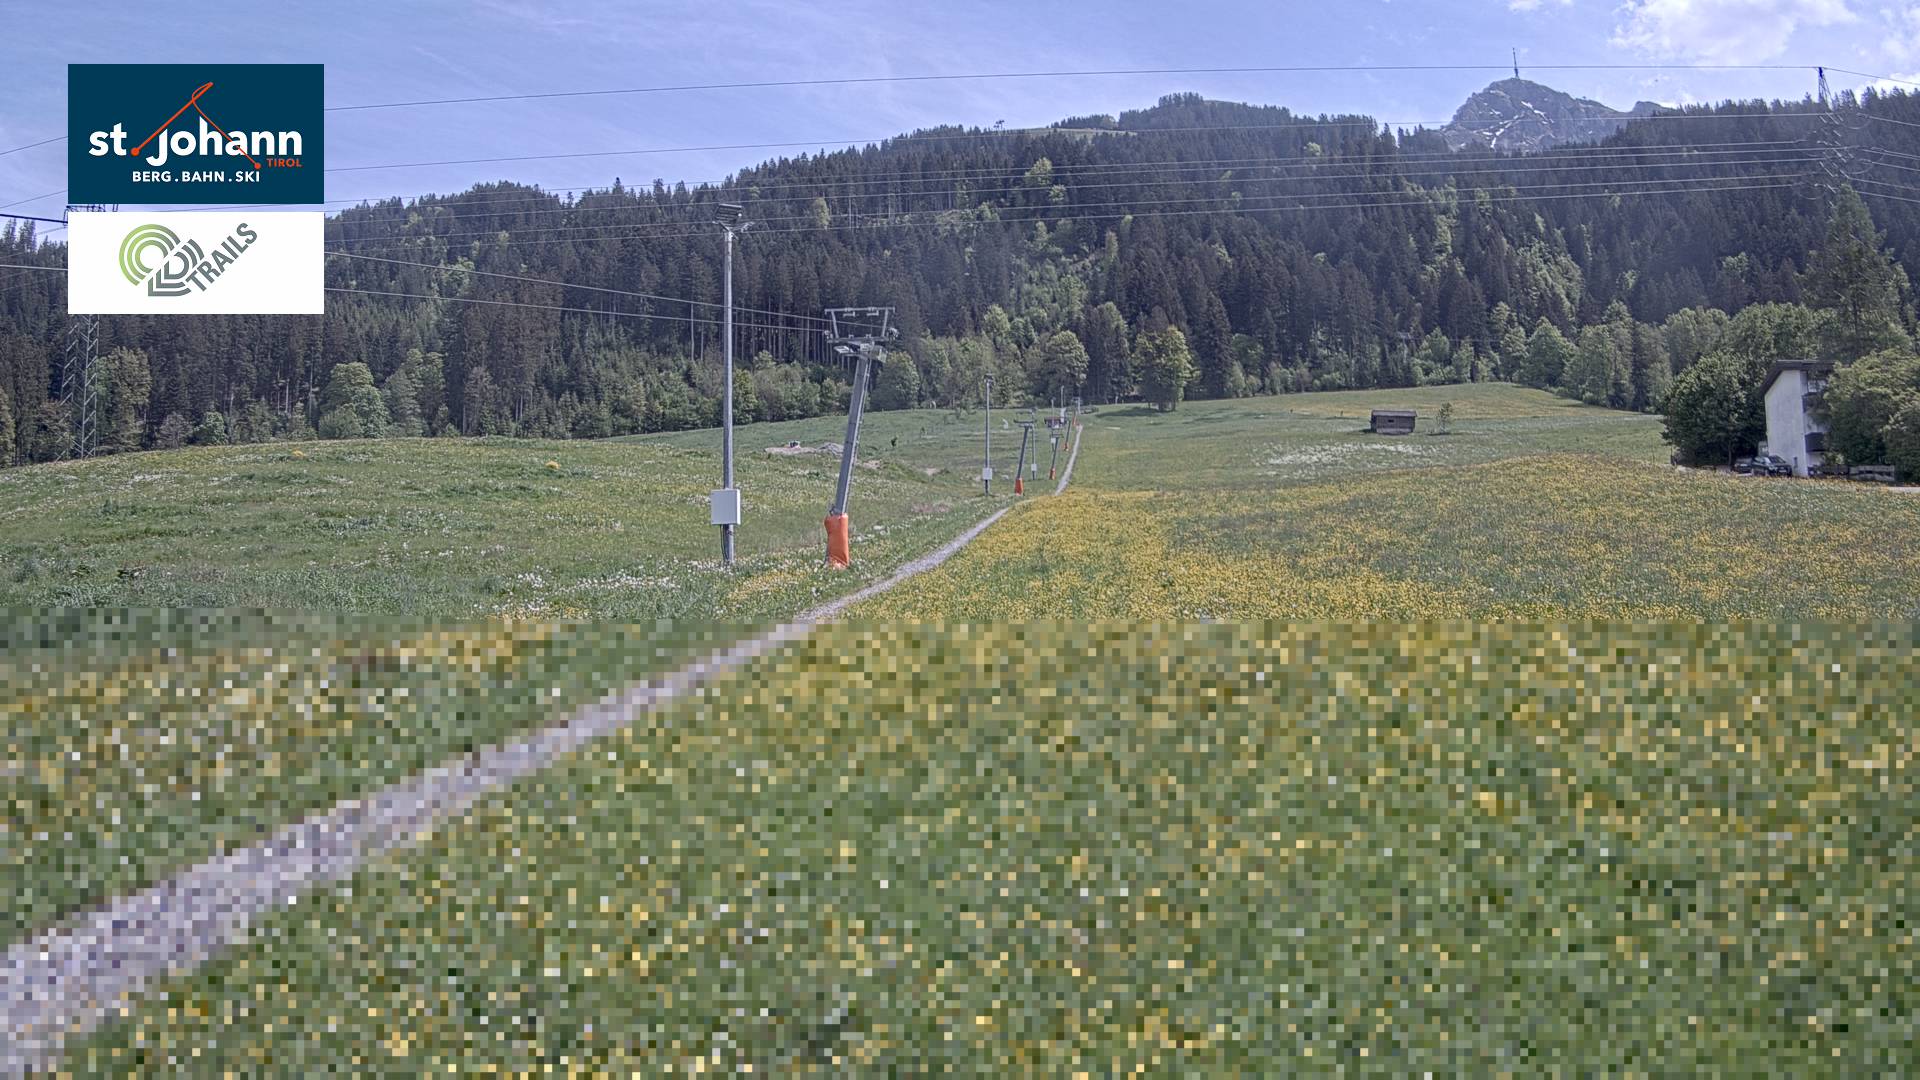 Tauwiesenlift & OD Trails